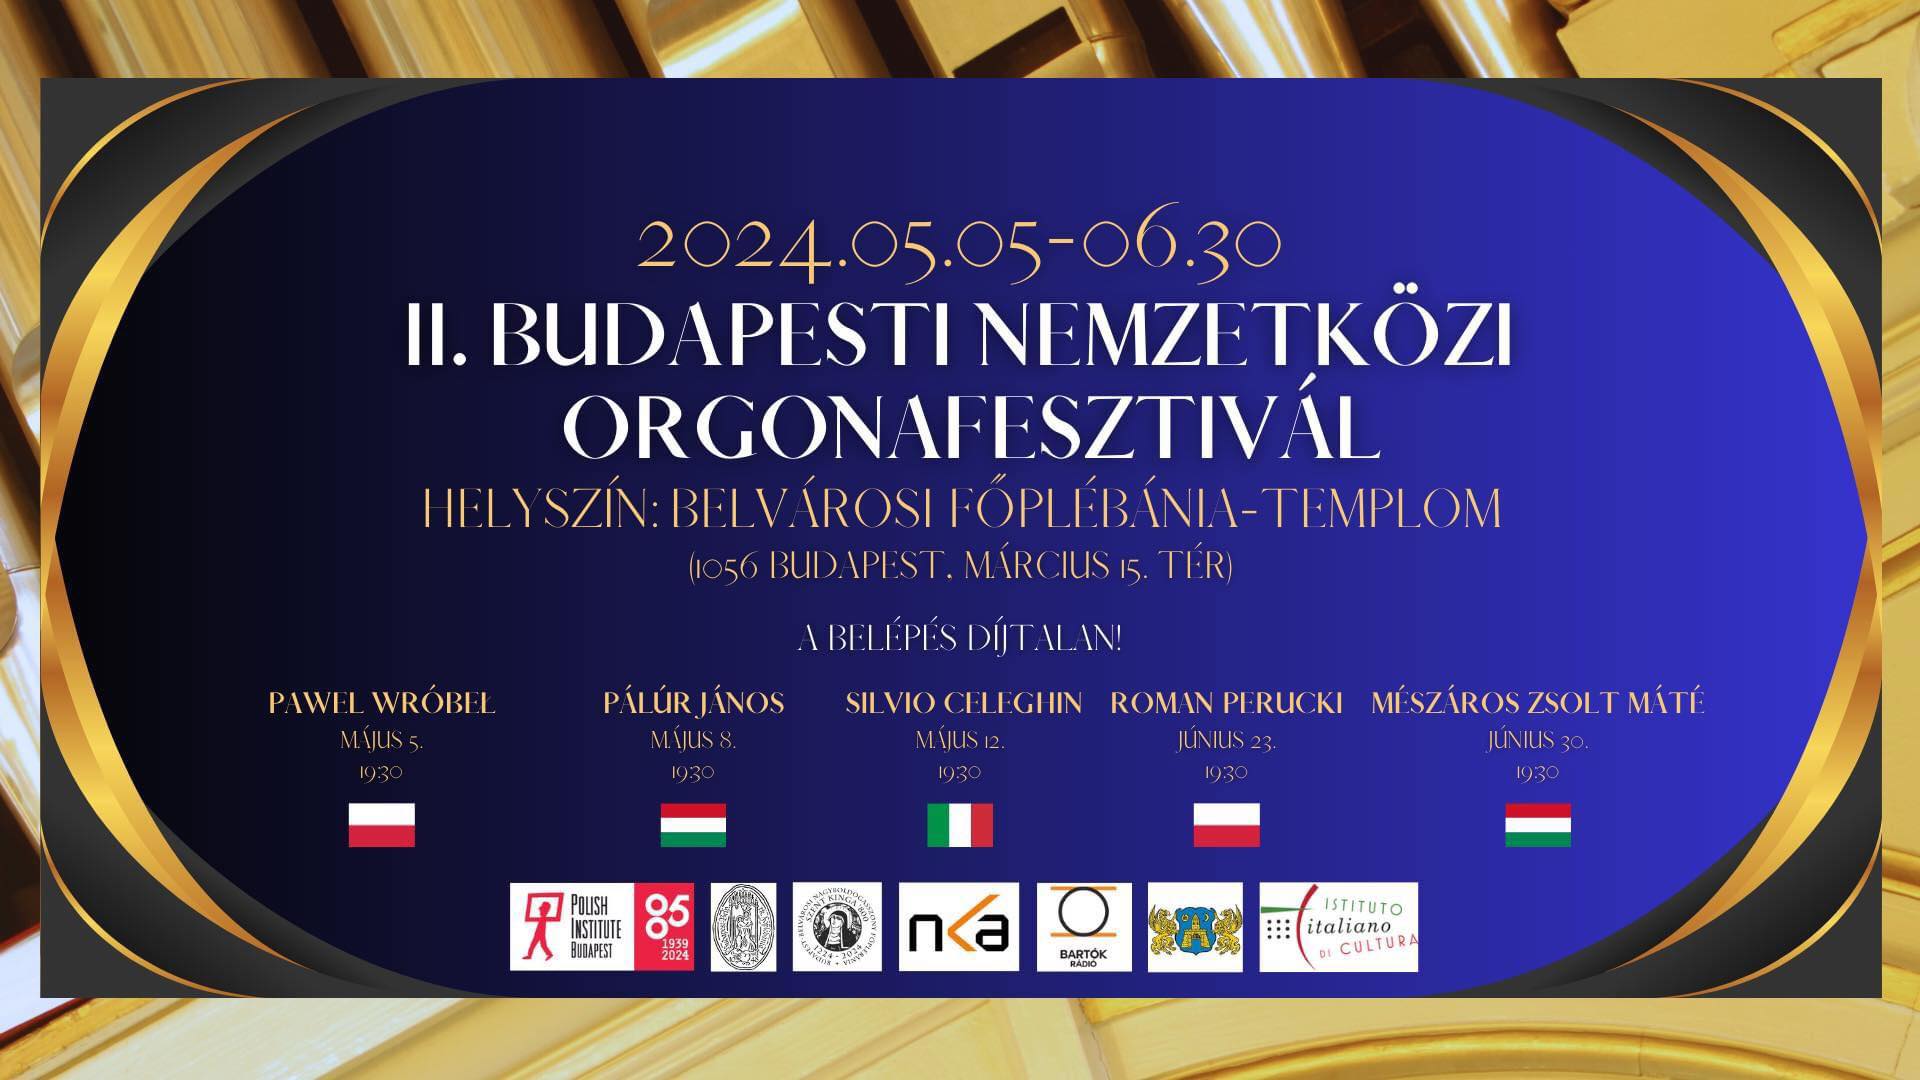 BUDAPEST ORGAN FESTIVAL 2024 